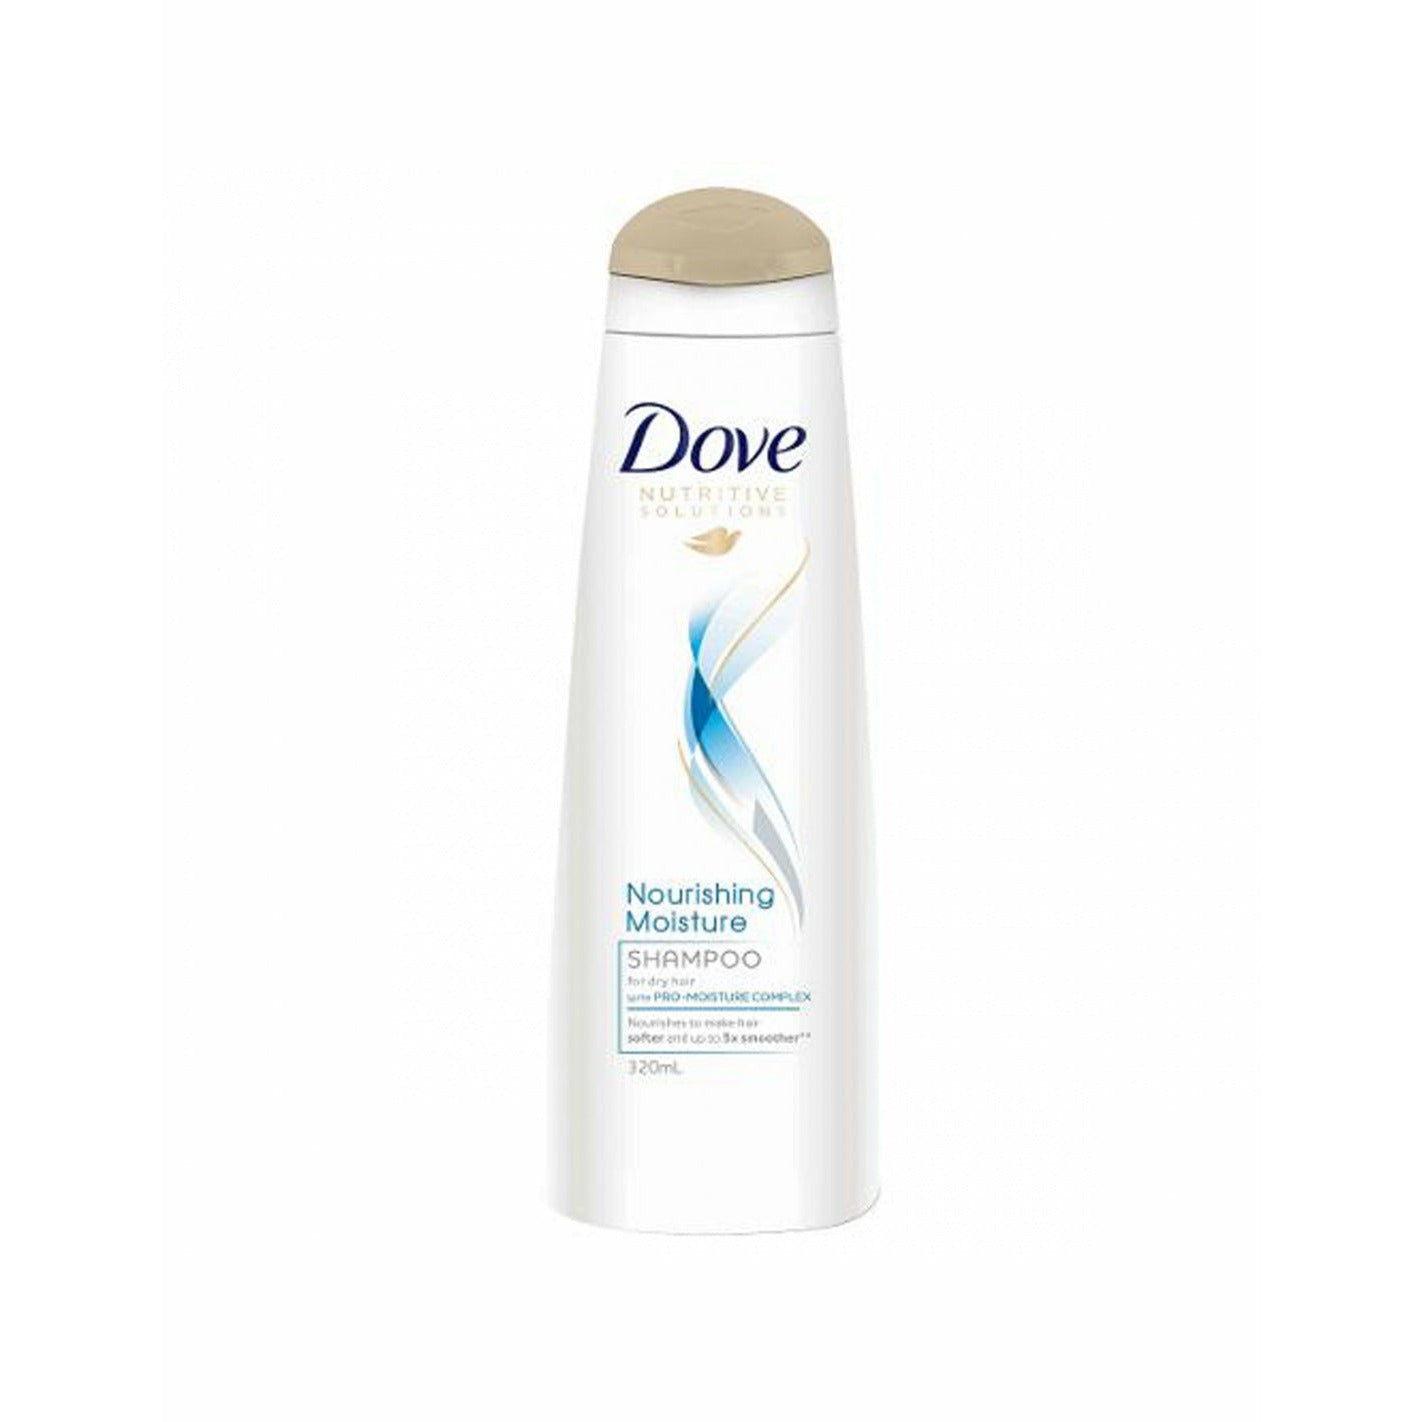 Dove Nourishing Moisture Shampoo For Normal To Dry Hair 320ml